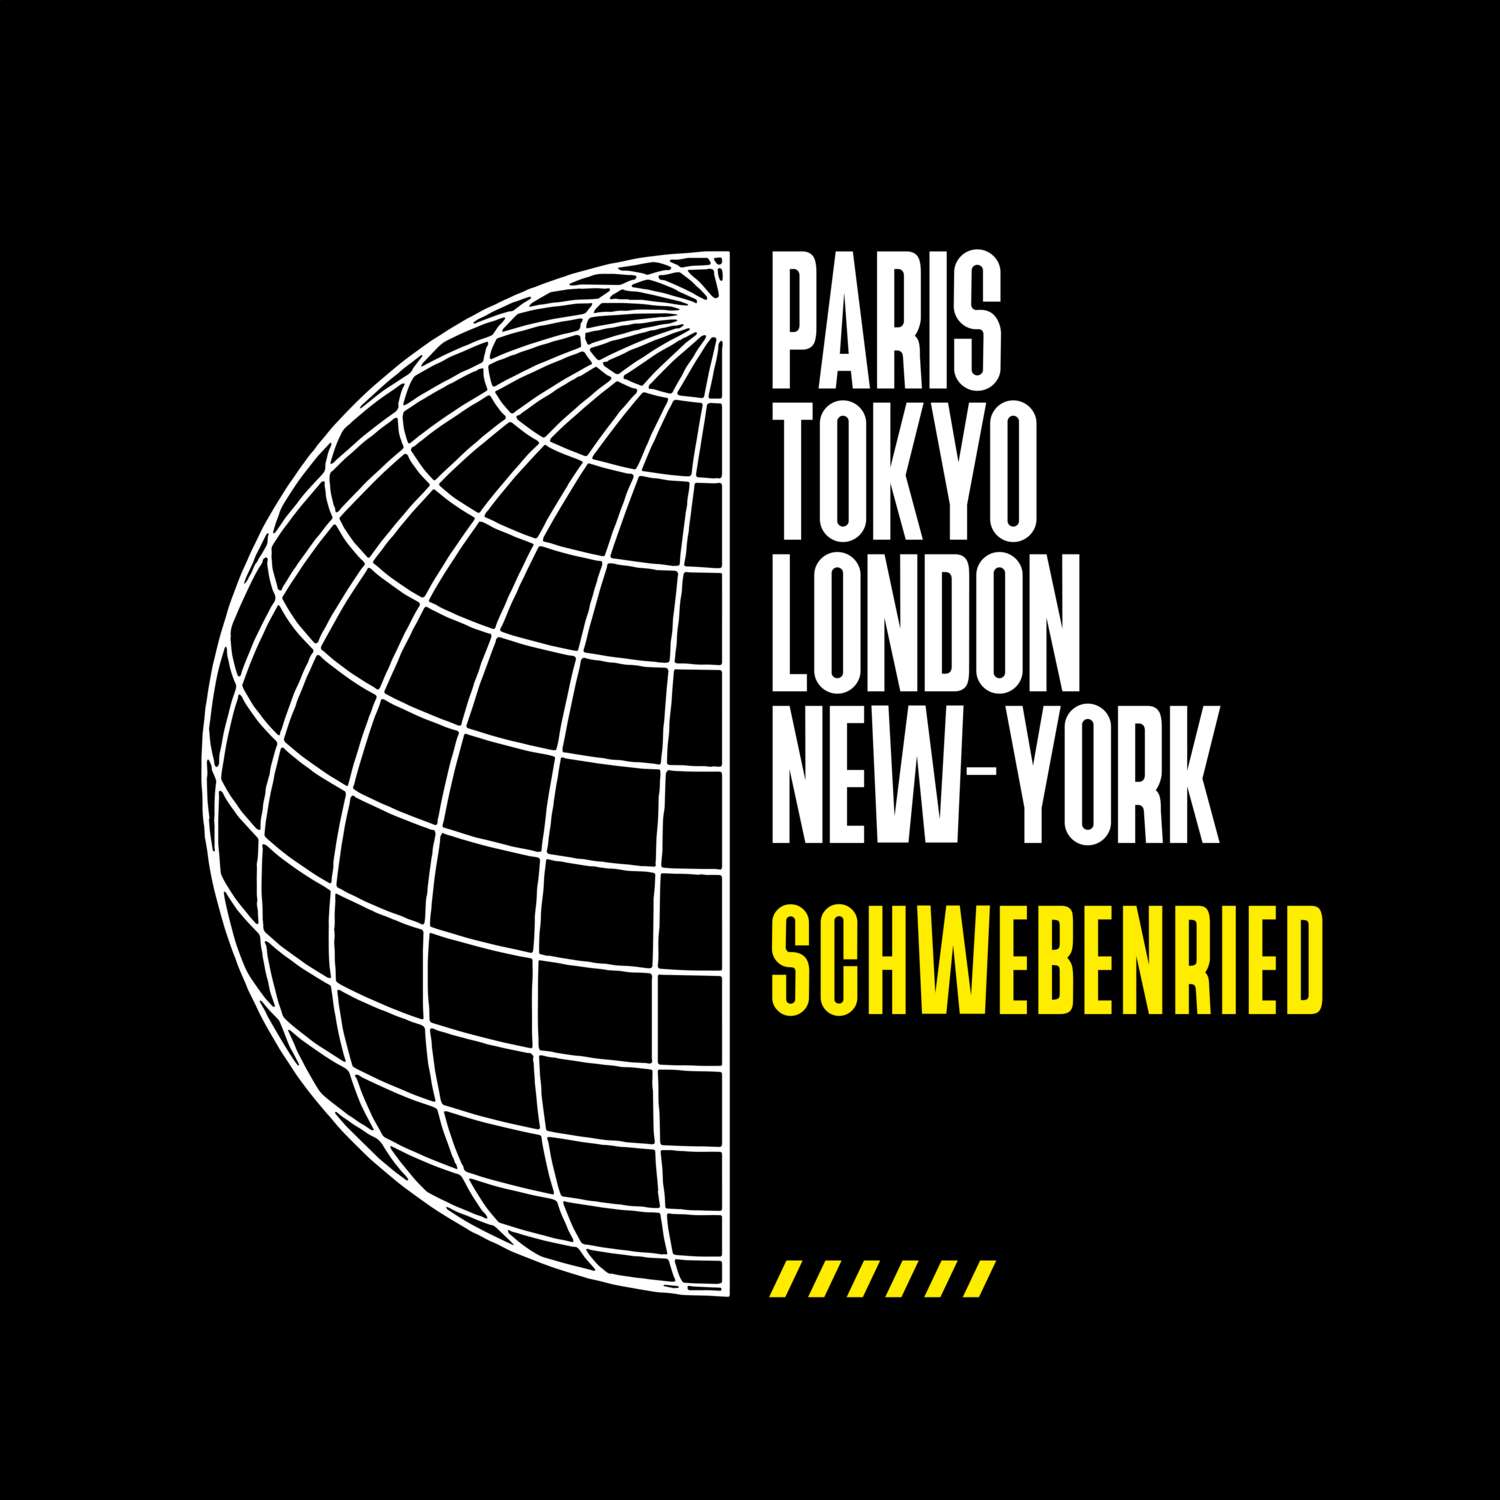 Schwebenried T-Shirt »Paris Tokyo London«